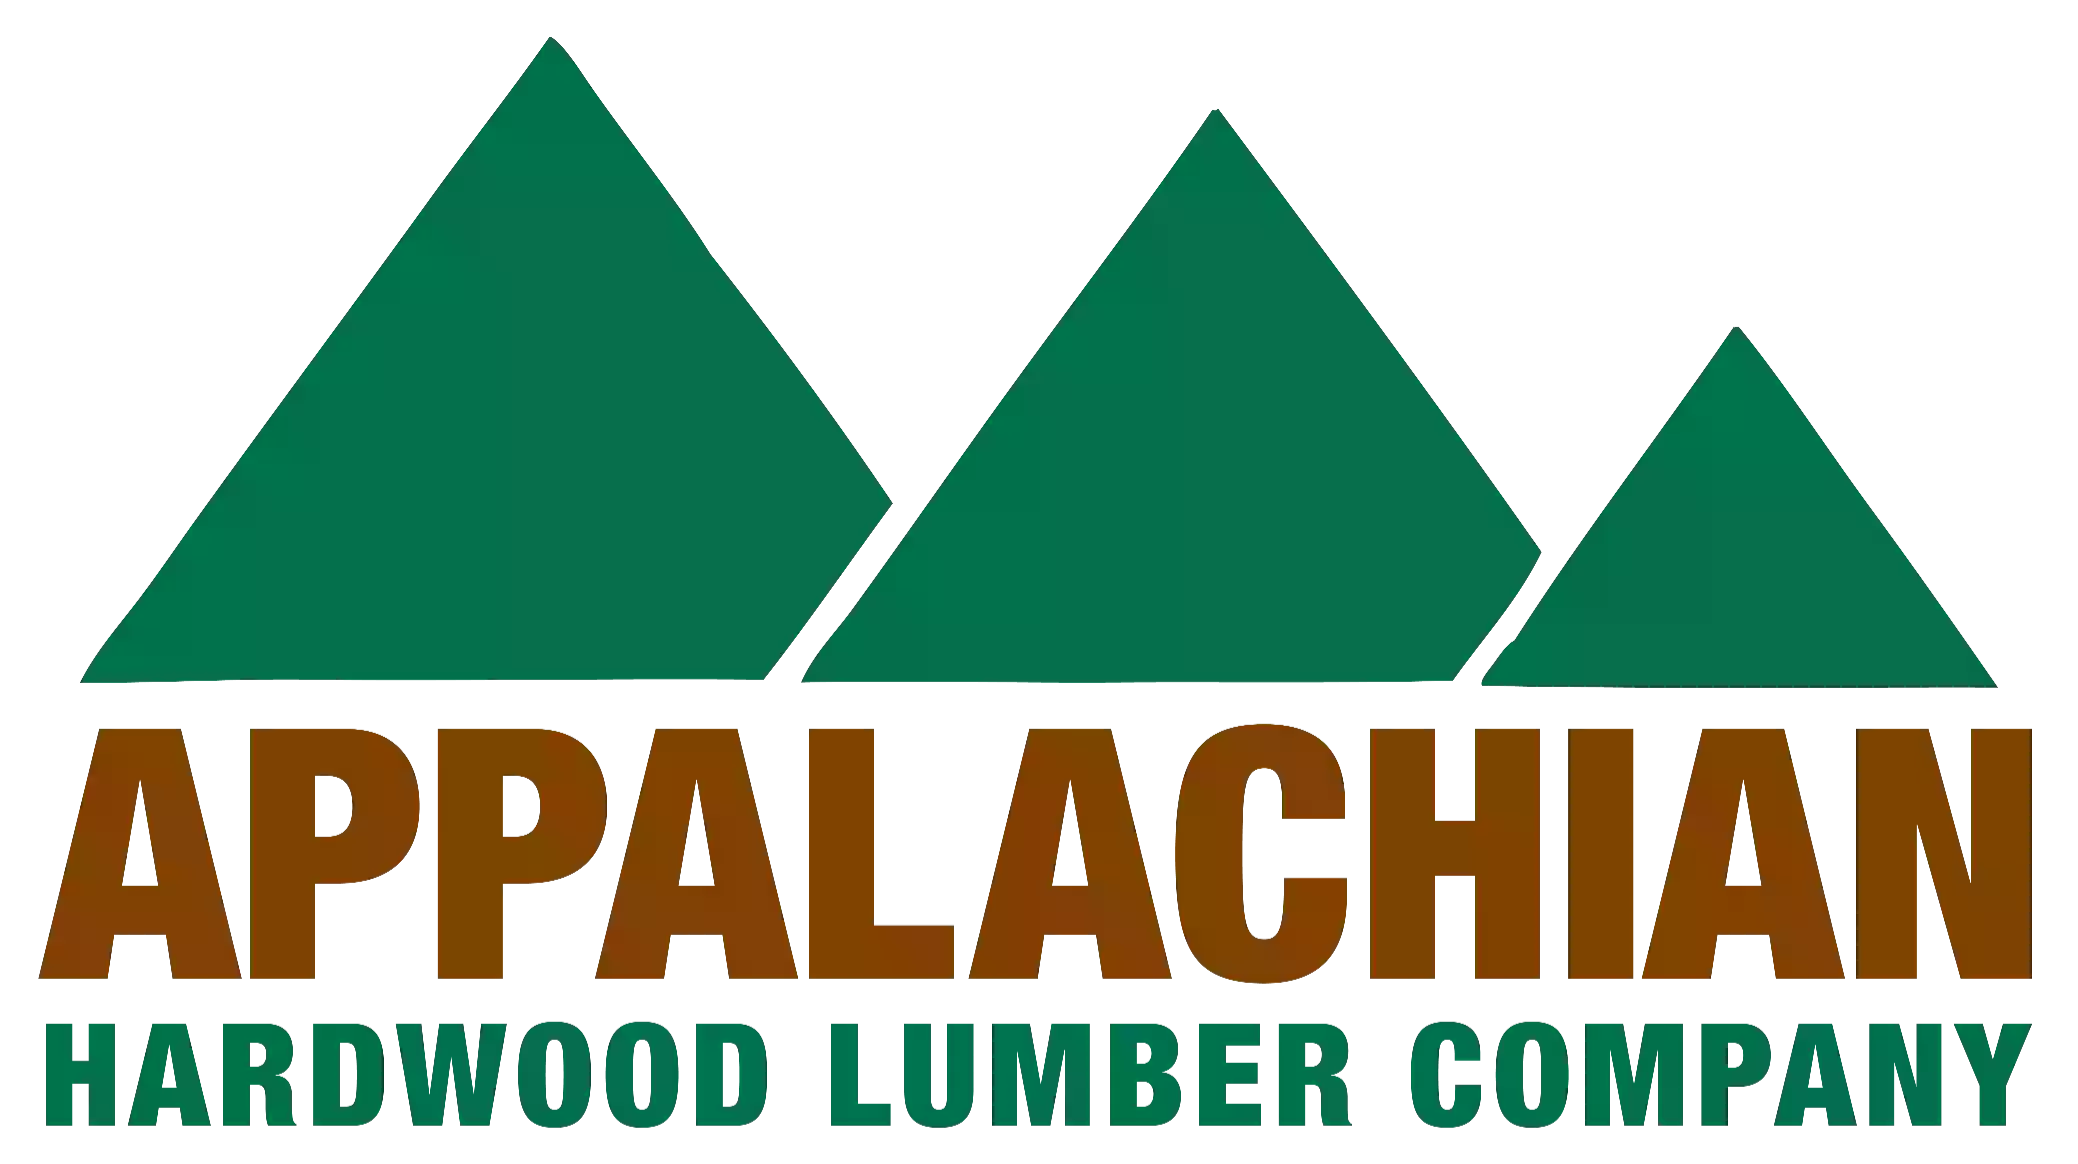 The Appalachian Hardwood Lumber Company